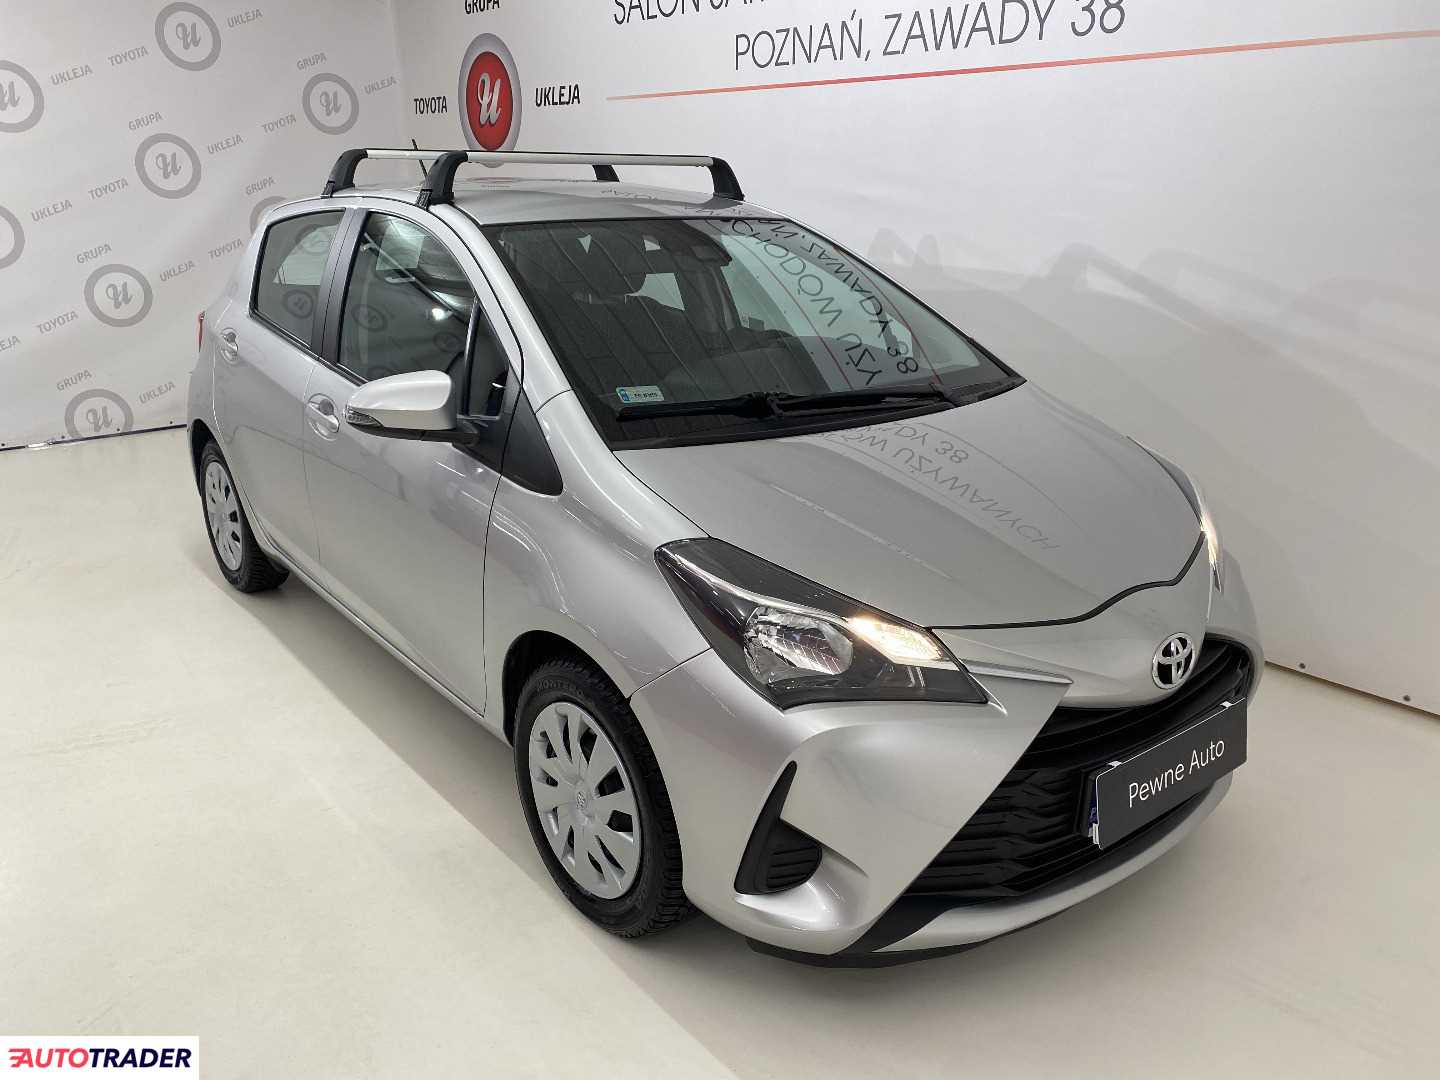 Toyota Yaris 2018 1.5 111 KM